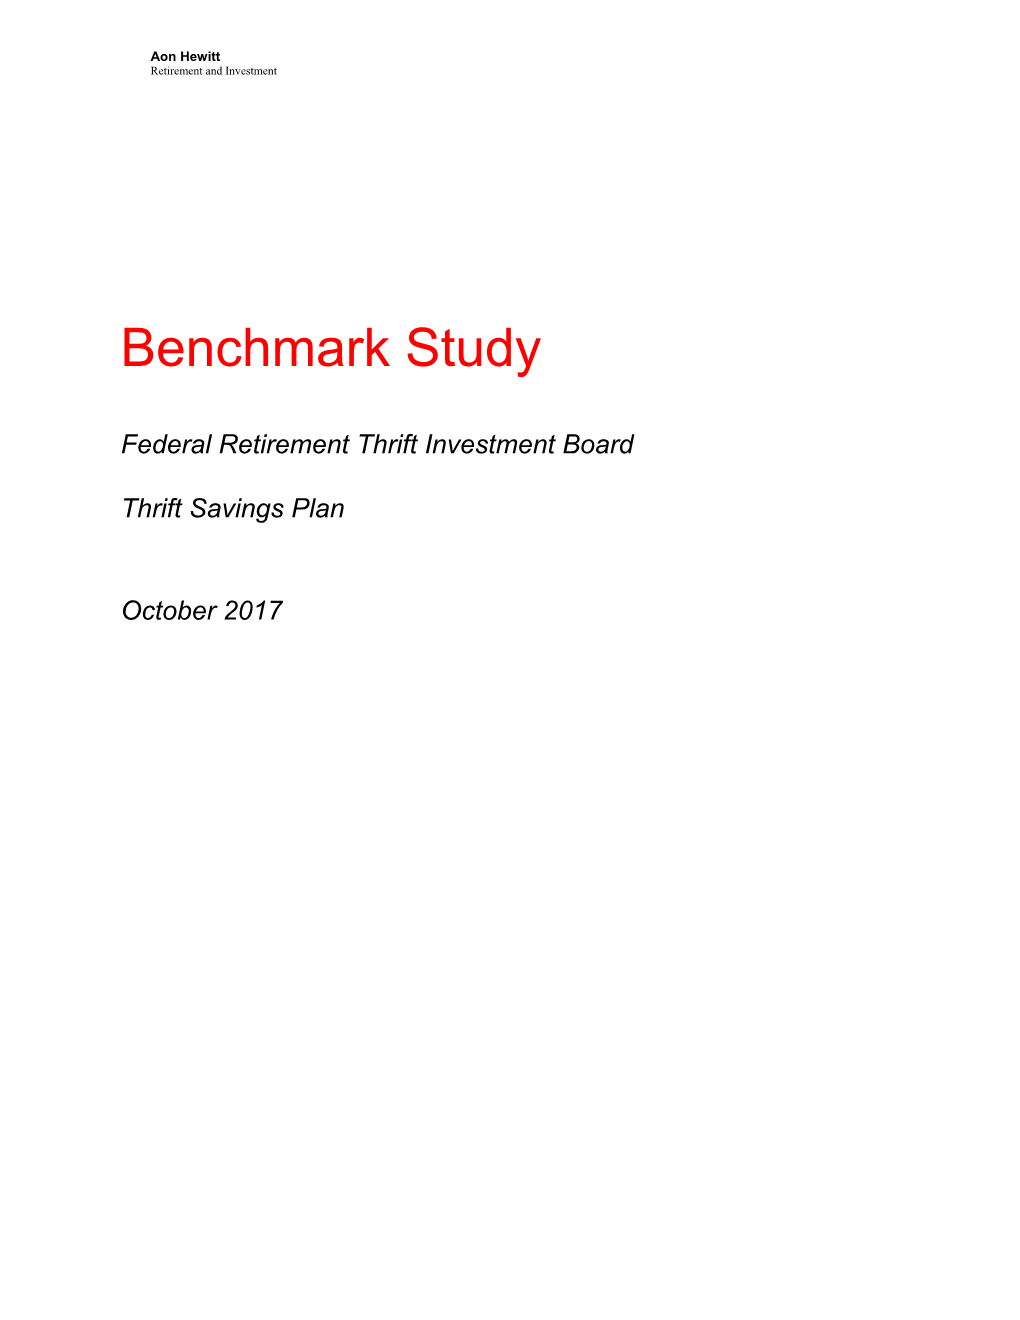 Benchmark Study